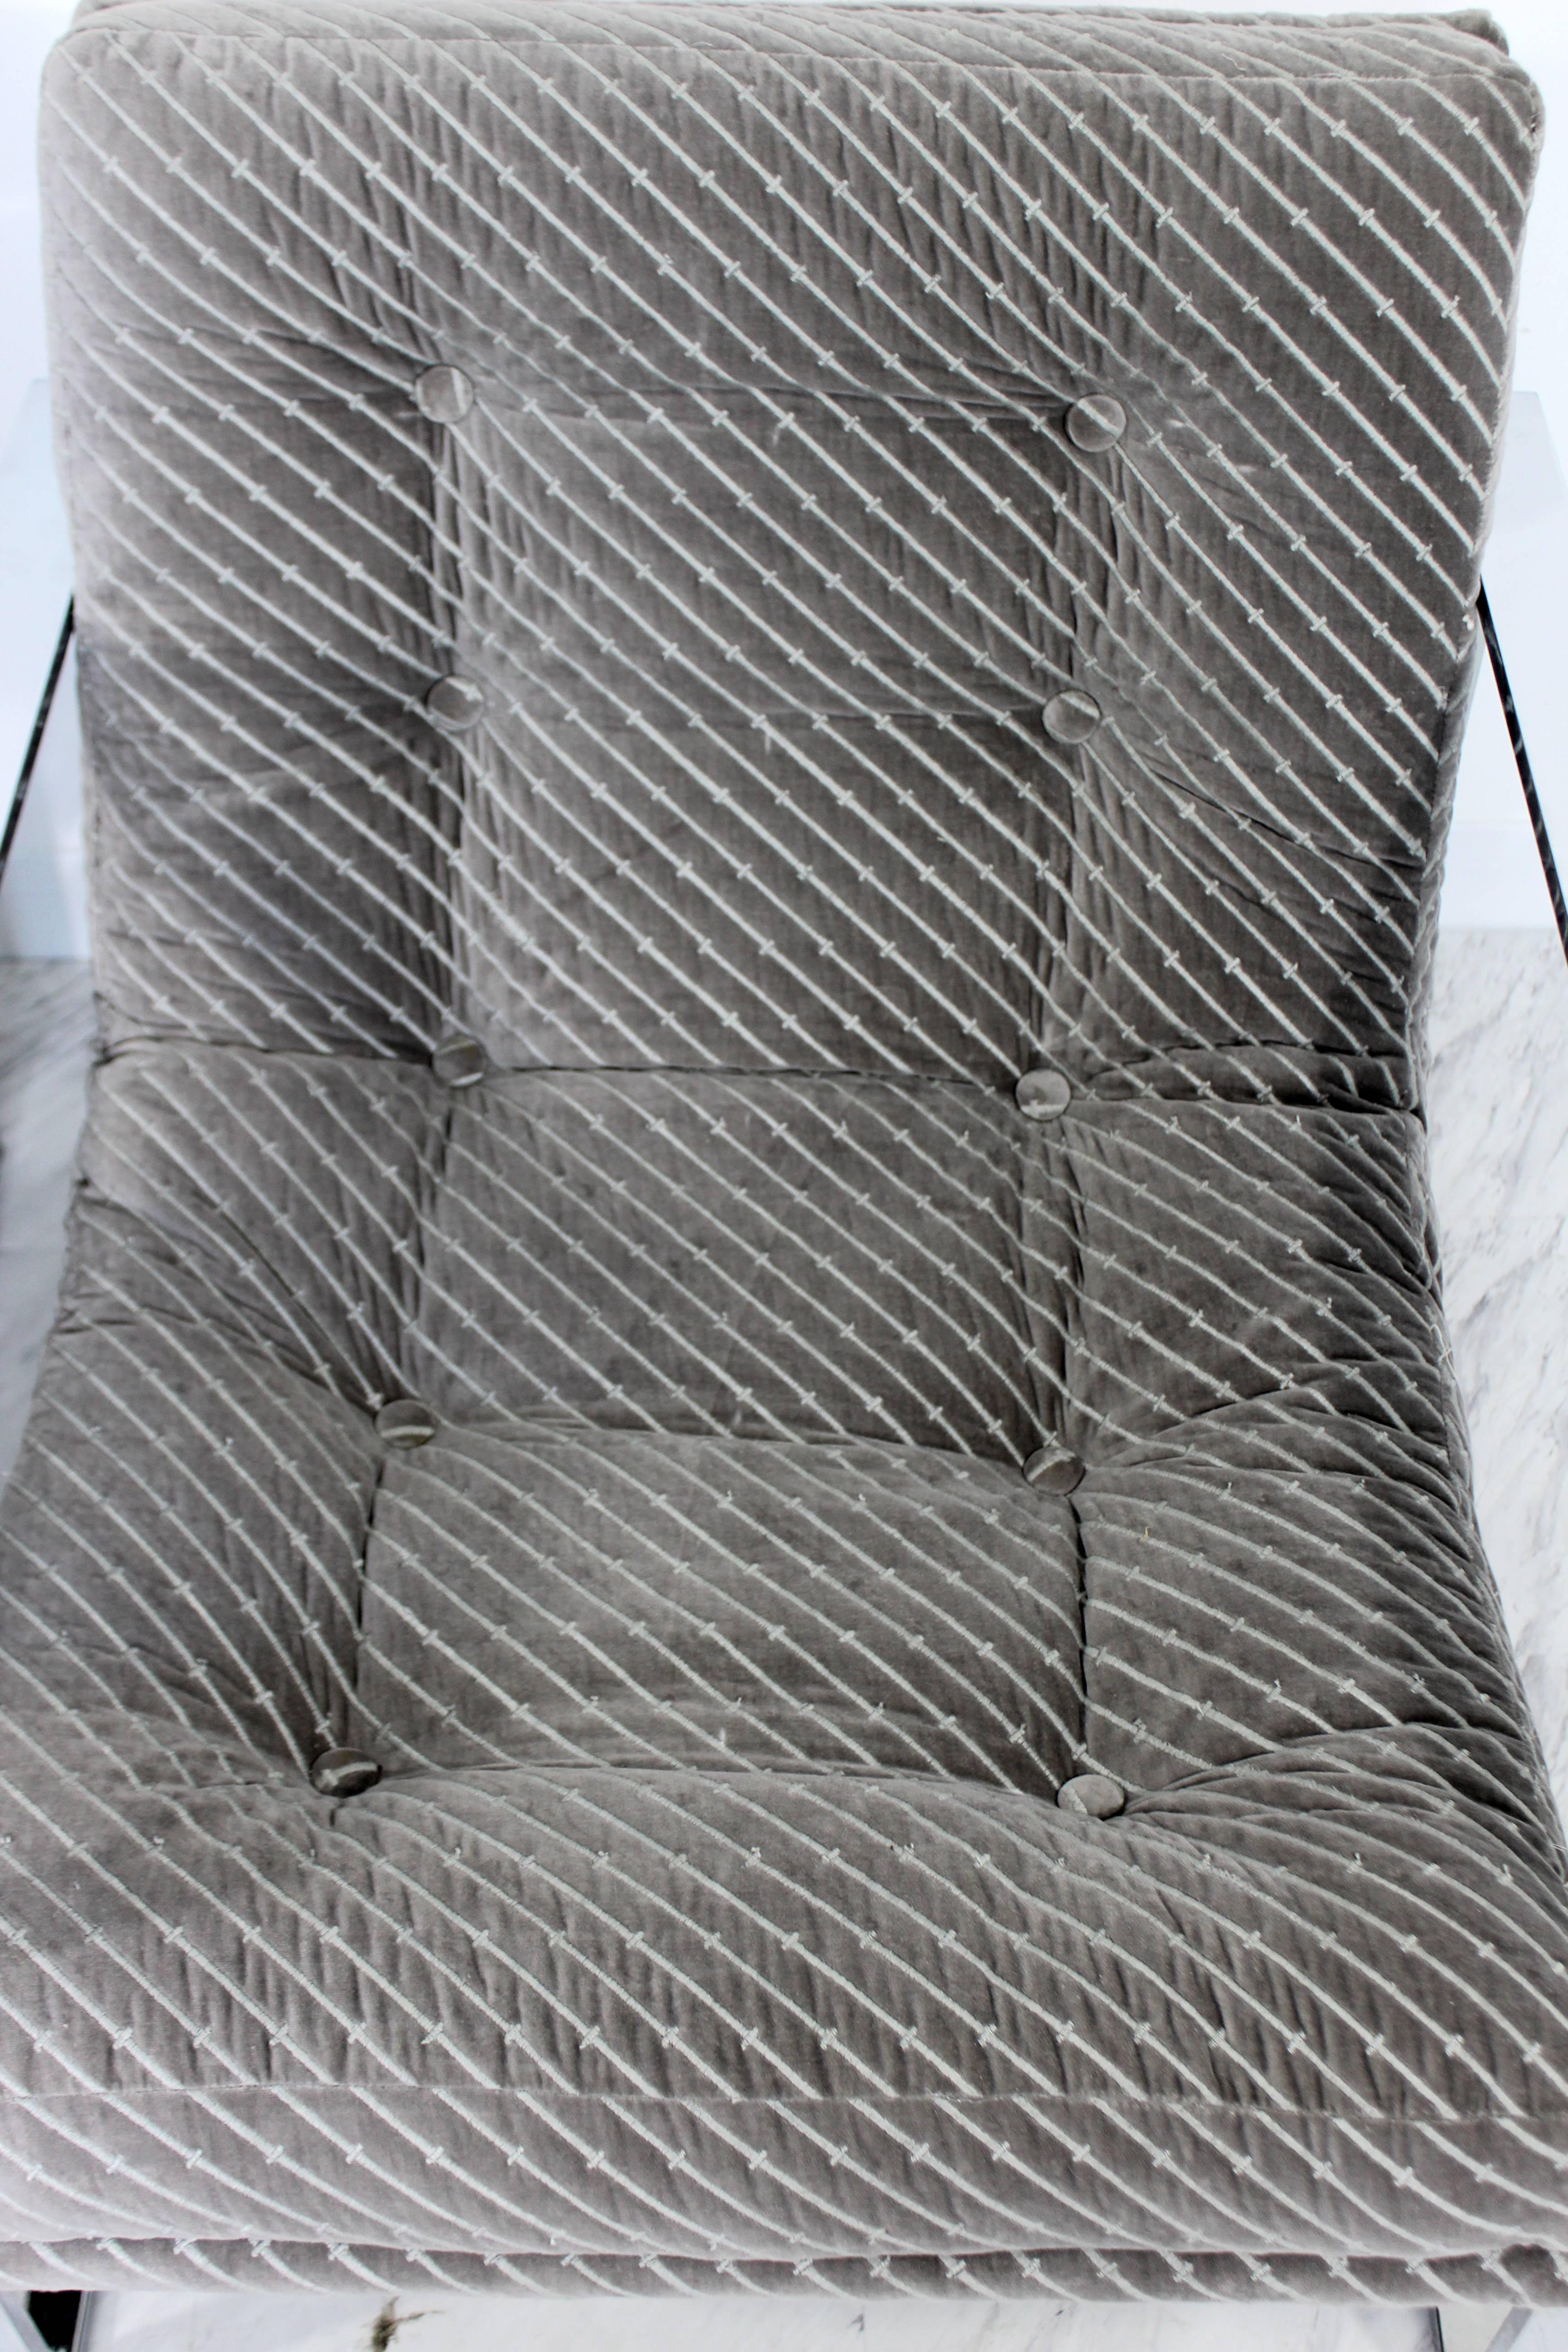 Mid-Century Modern Milo Baughman Attributed Flat Bar Scoop Lounge Chairs, Pair 1